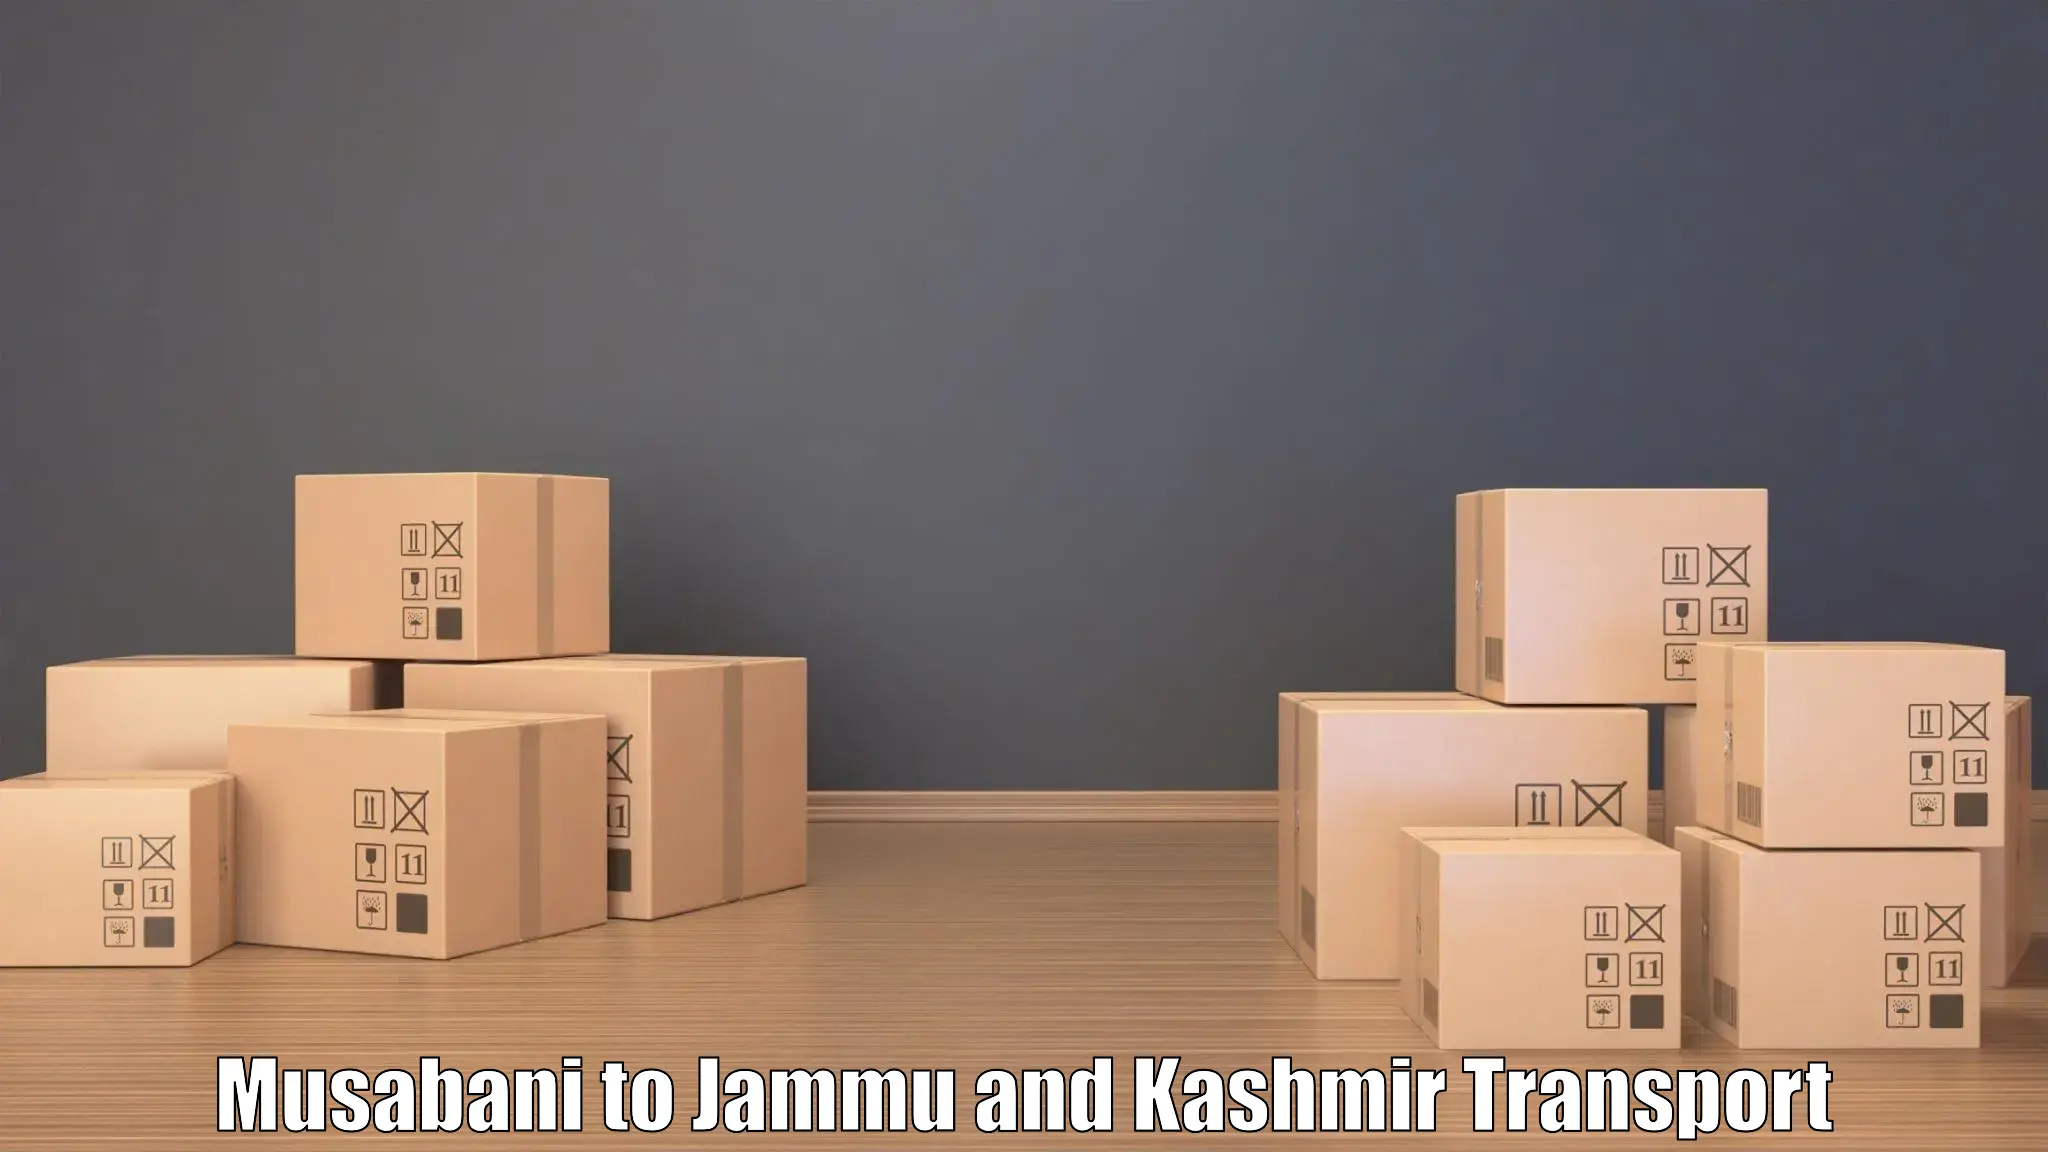 Sending bike to another city Musabani to Jammu and Kashmir